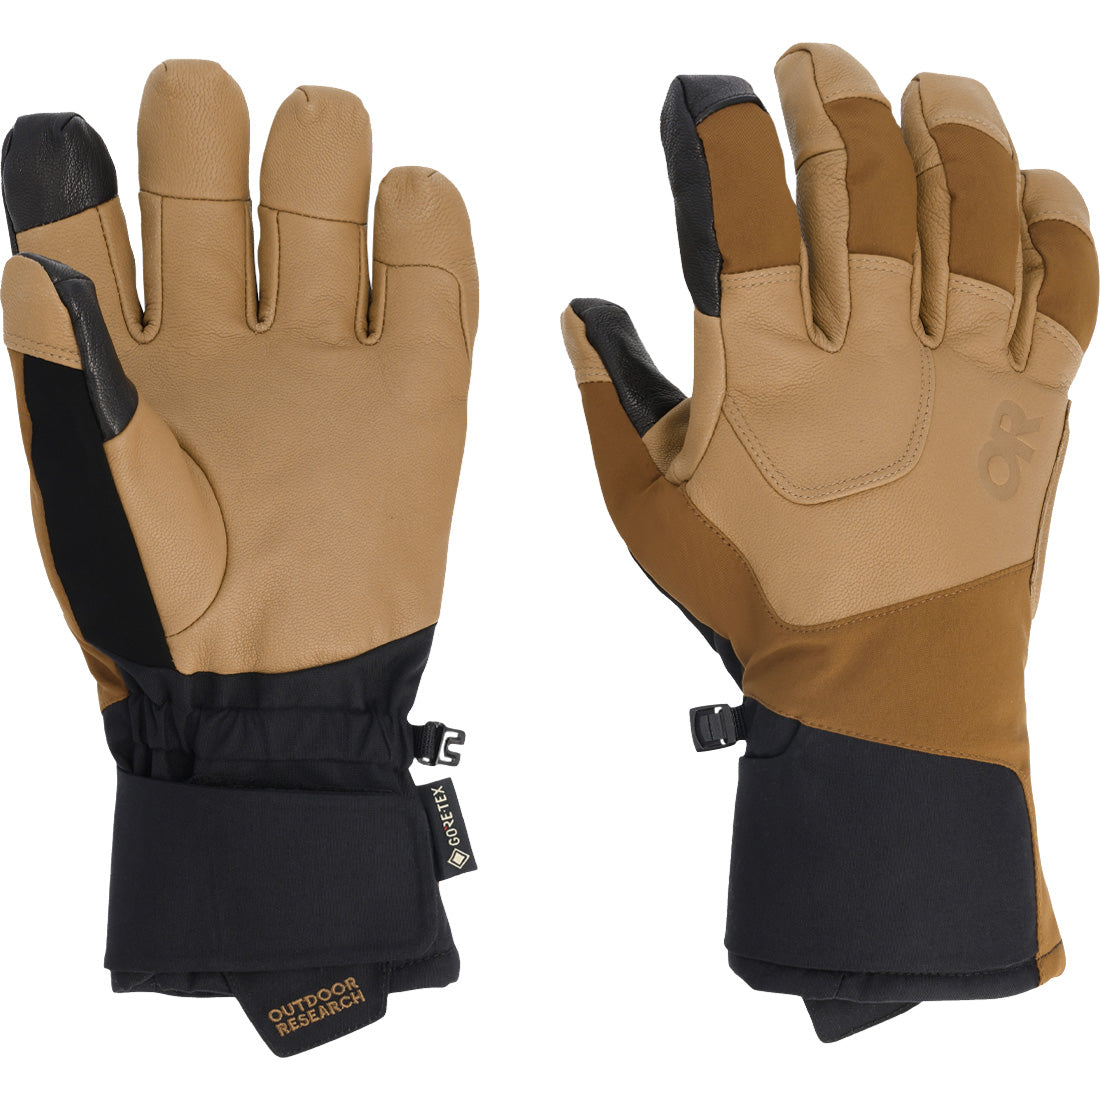 Outdoor Research Alpinite GTX Glove - Men's